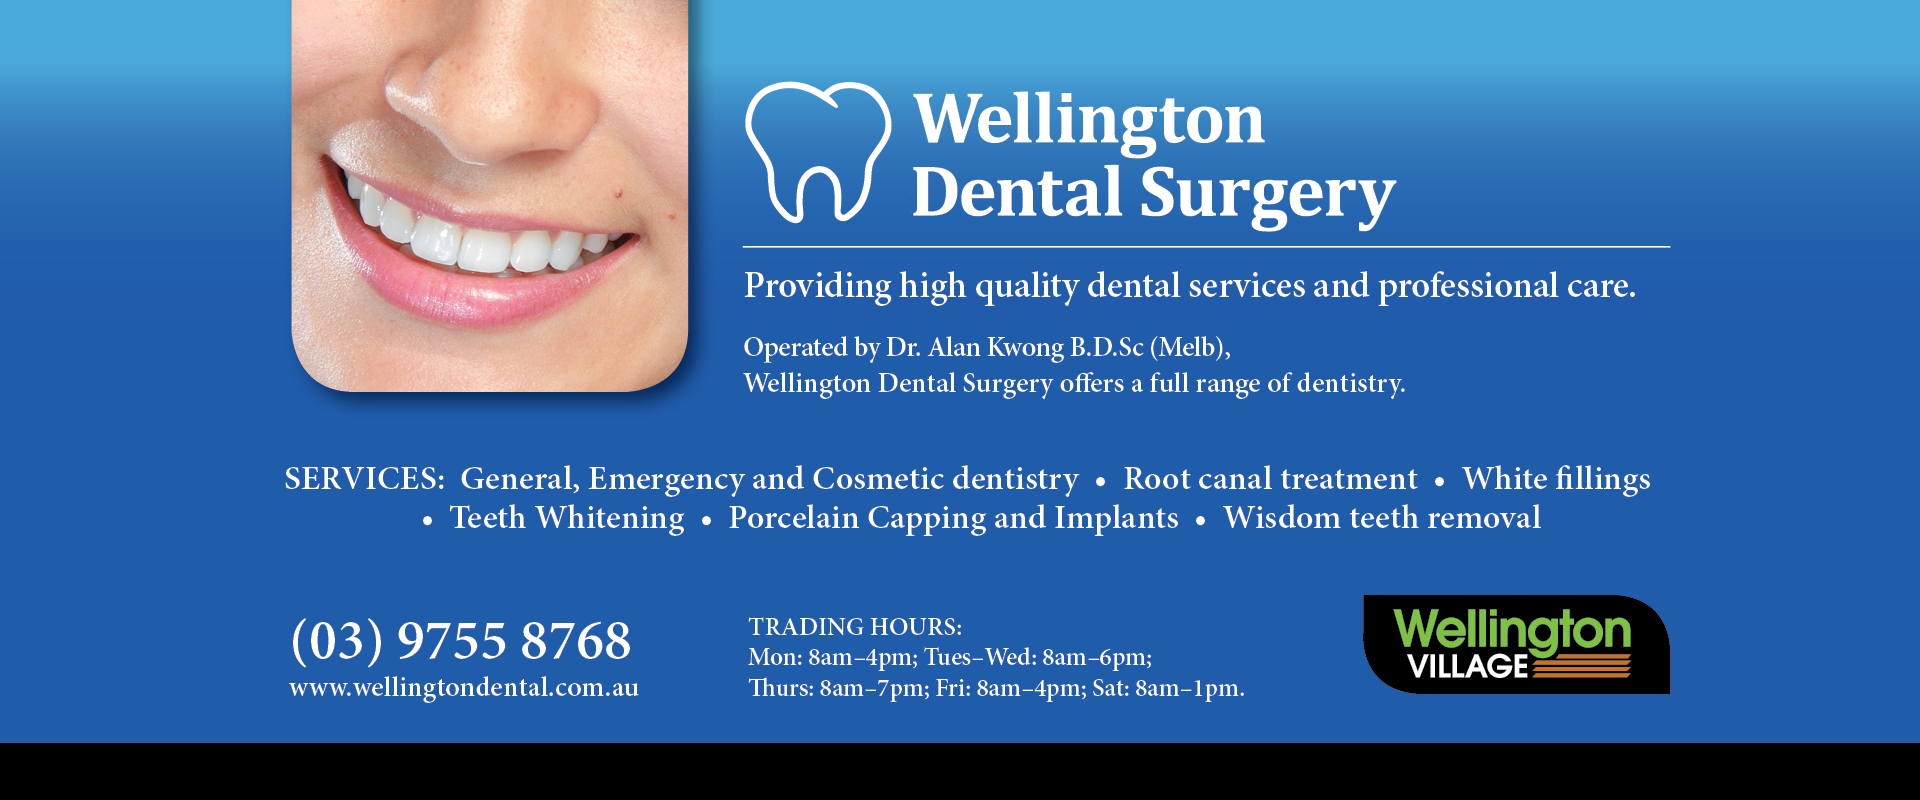 Ad for Wellington Dental Surgery